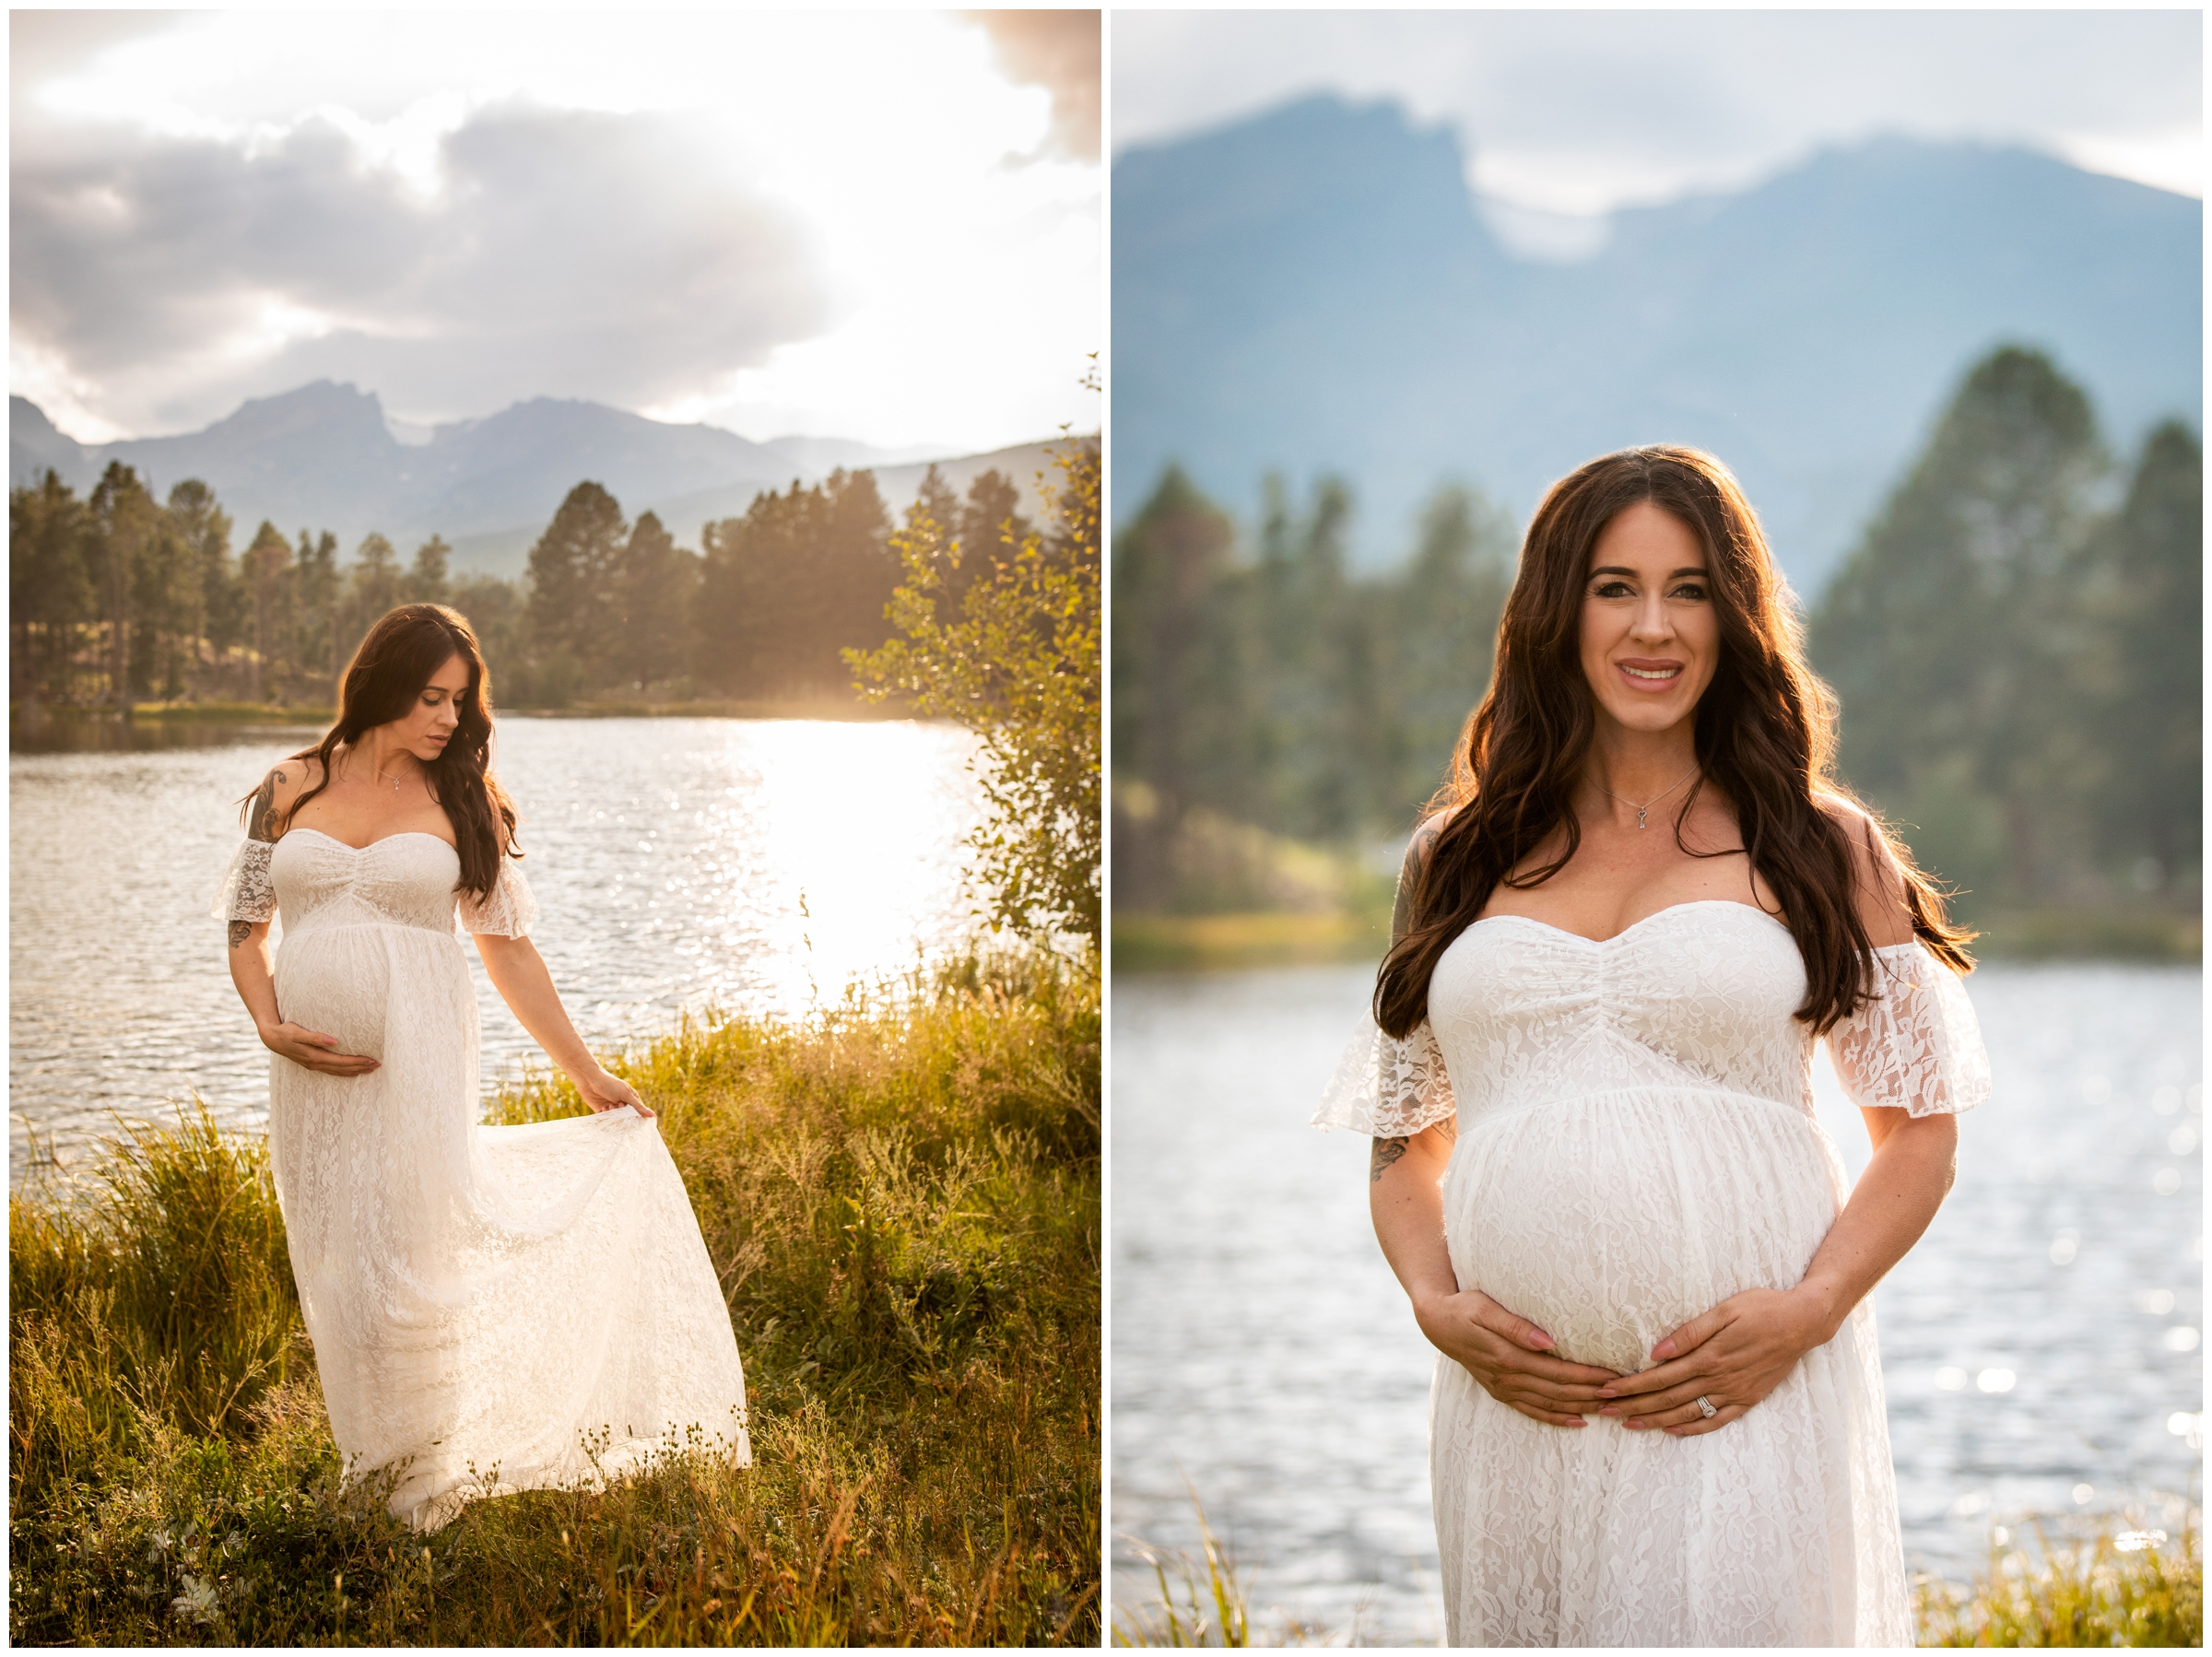 Sprague Lake Estes Park Colorado maternity portraits during the summer